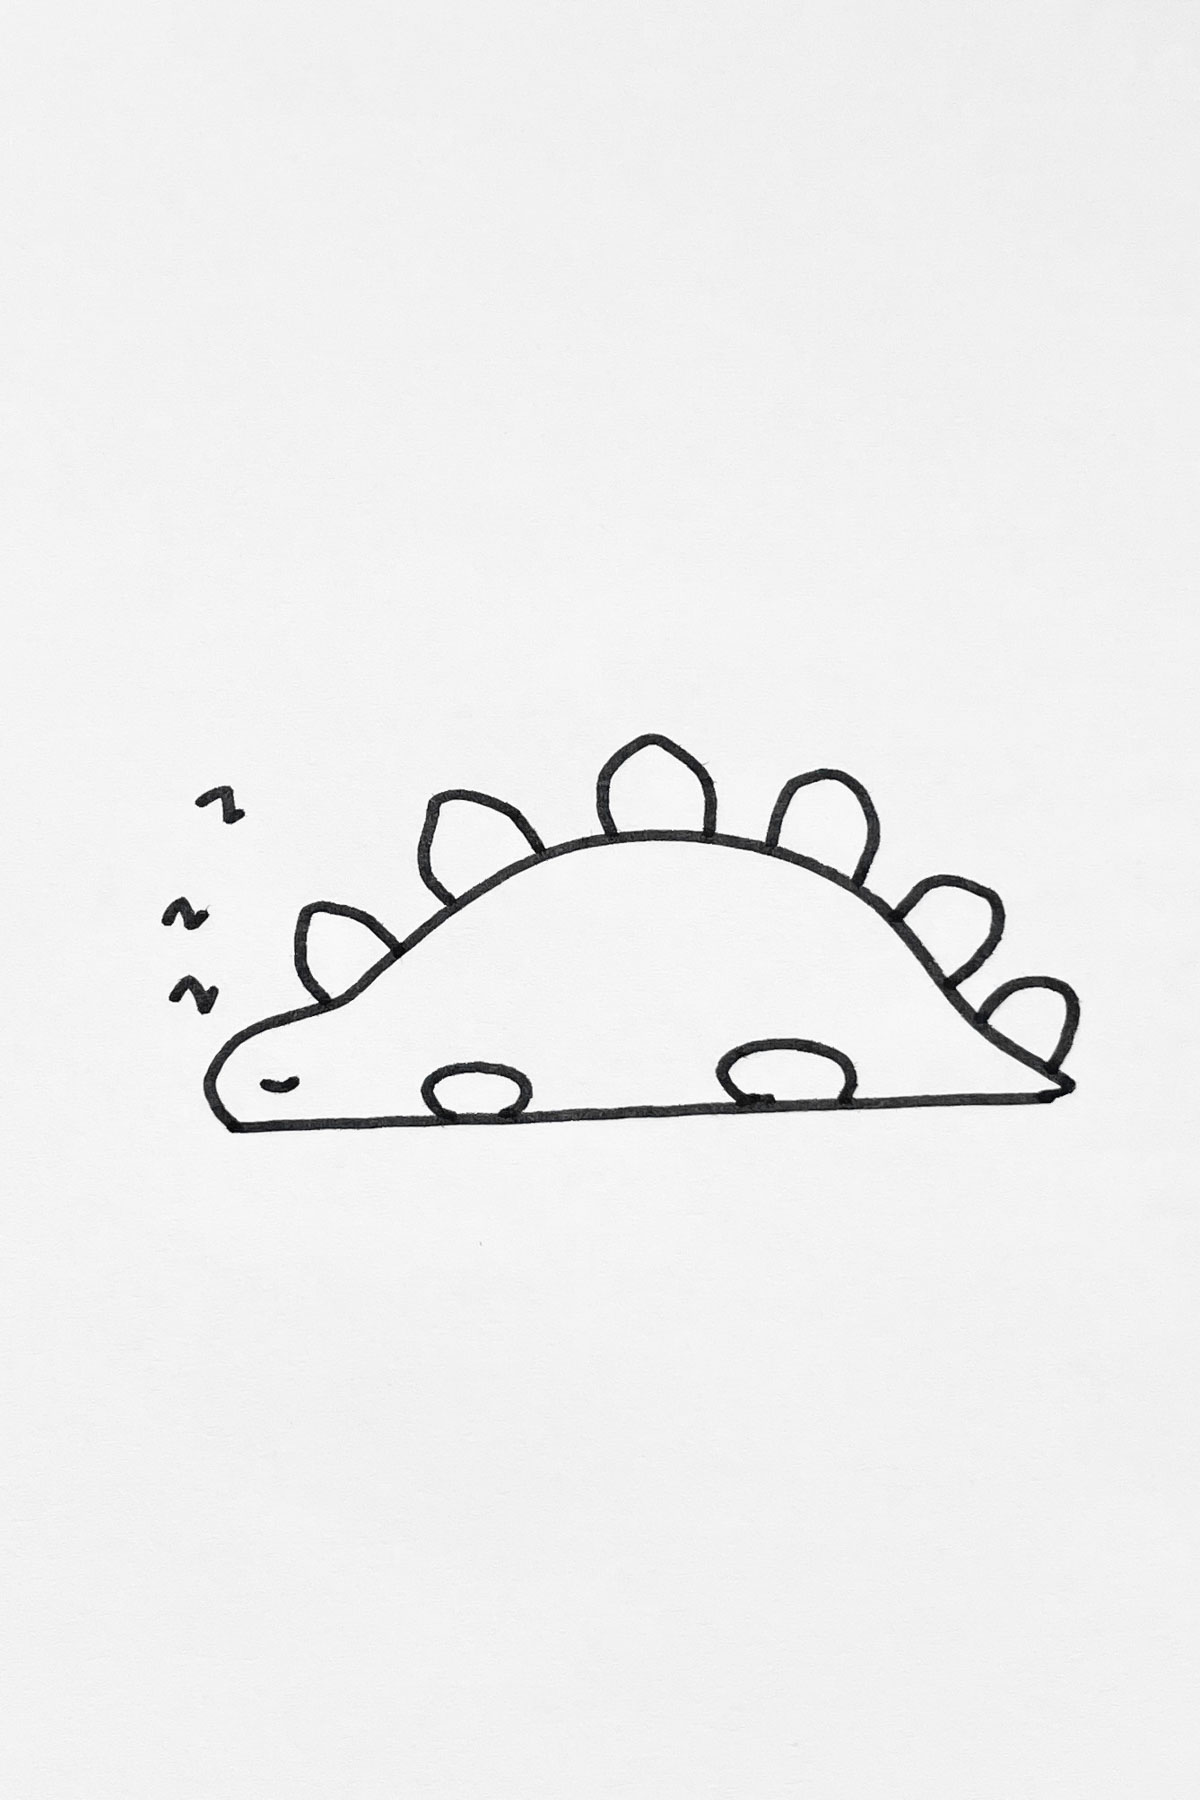 Sleeping Dinosaur drawing